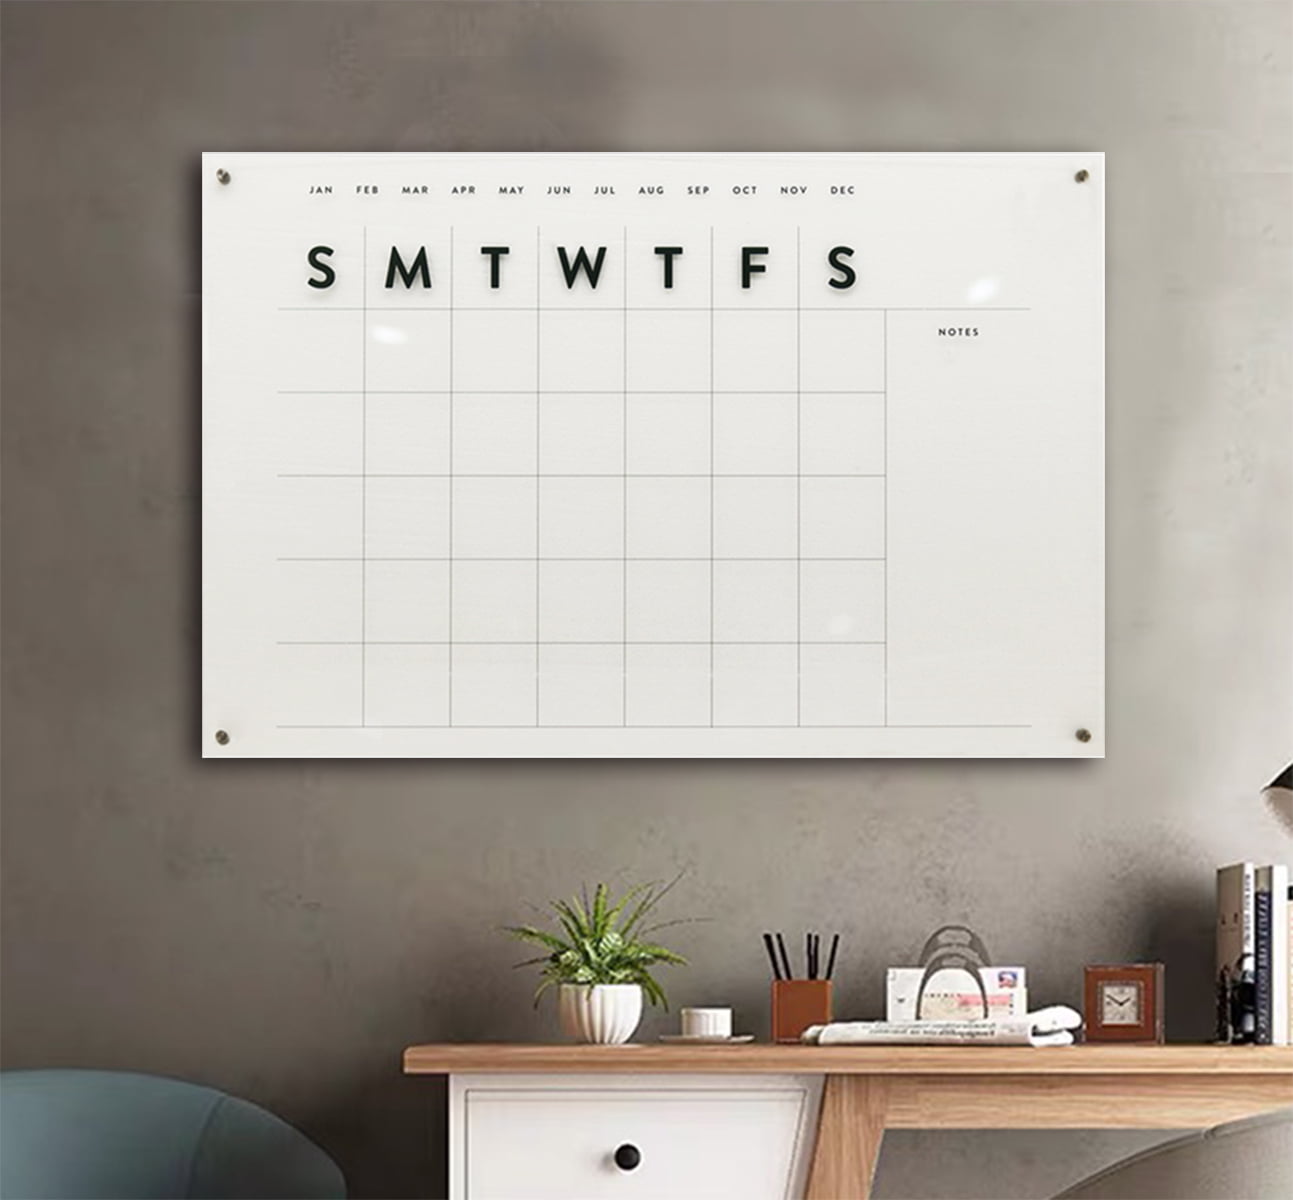 Monthly Planner Chalkboard Blackboard Removable Calendar Memo Wall Sticker LC 